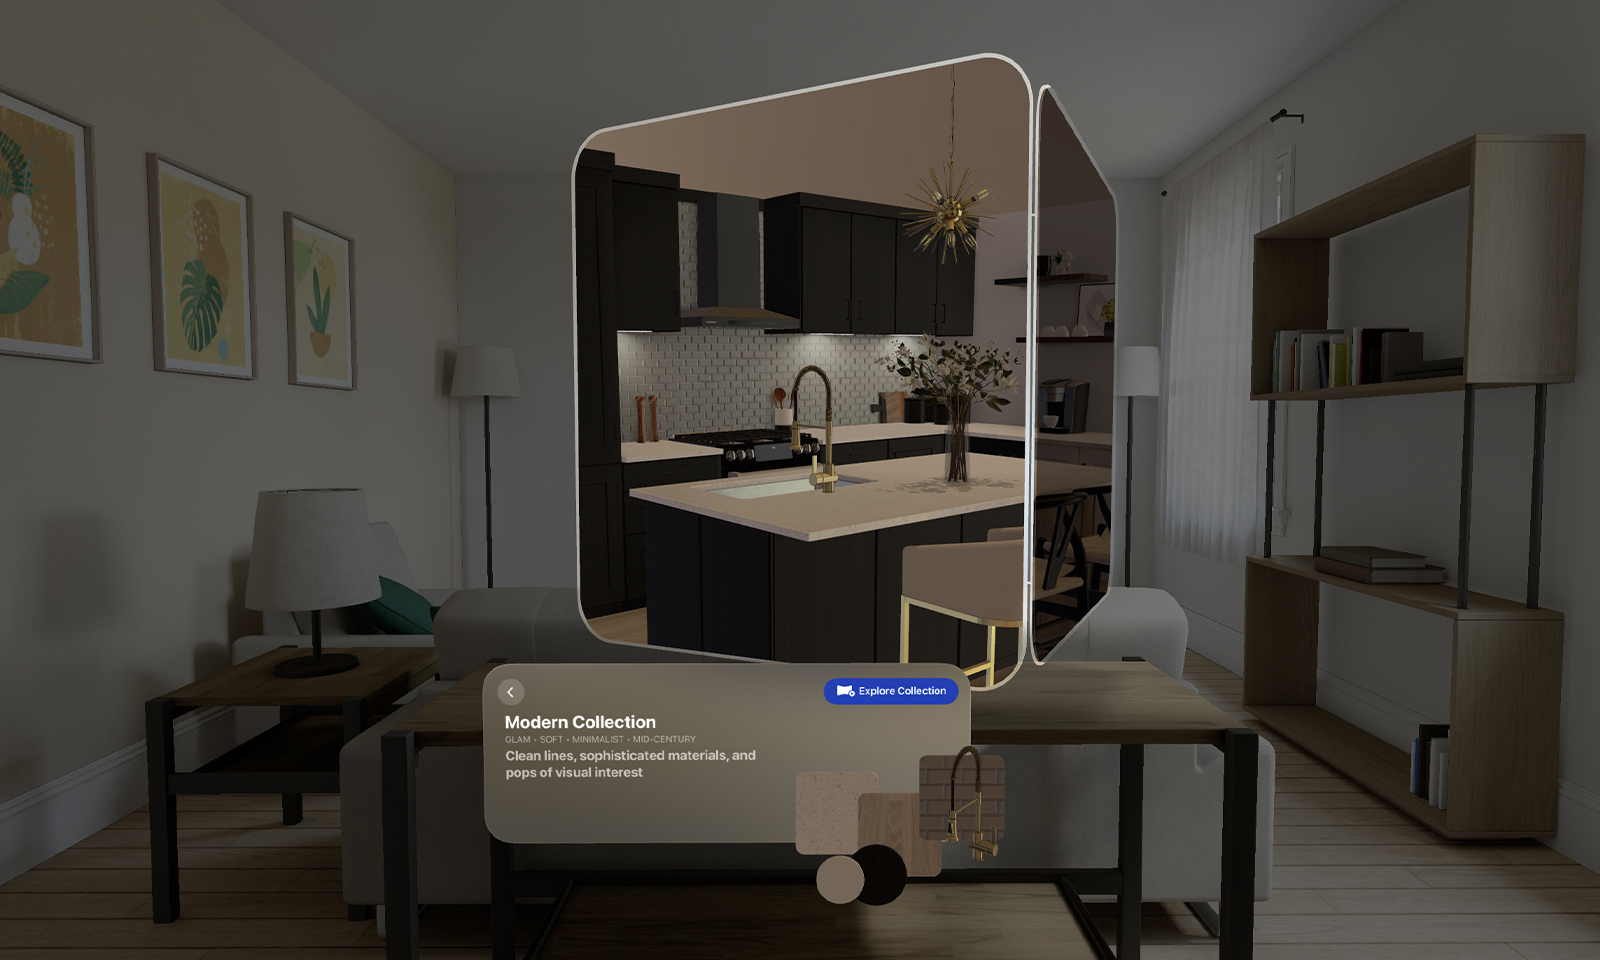 VisionOS પર લોવેની એપ્લિકેશનની છબી.  લિવિંગ રૂમમાં સિંક દર્શાવતી વિન્ડો 3D વિન્ડોમાં તરતી રહે છે અને તેની પાછળ વાસ્તવિક લિવિંગ રૂમ દેખાય છે.